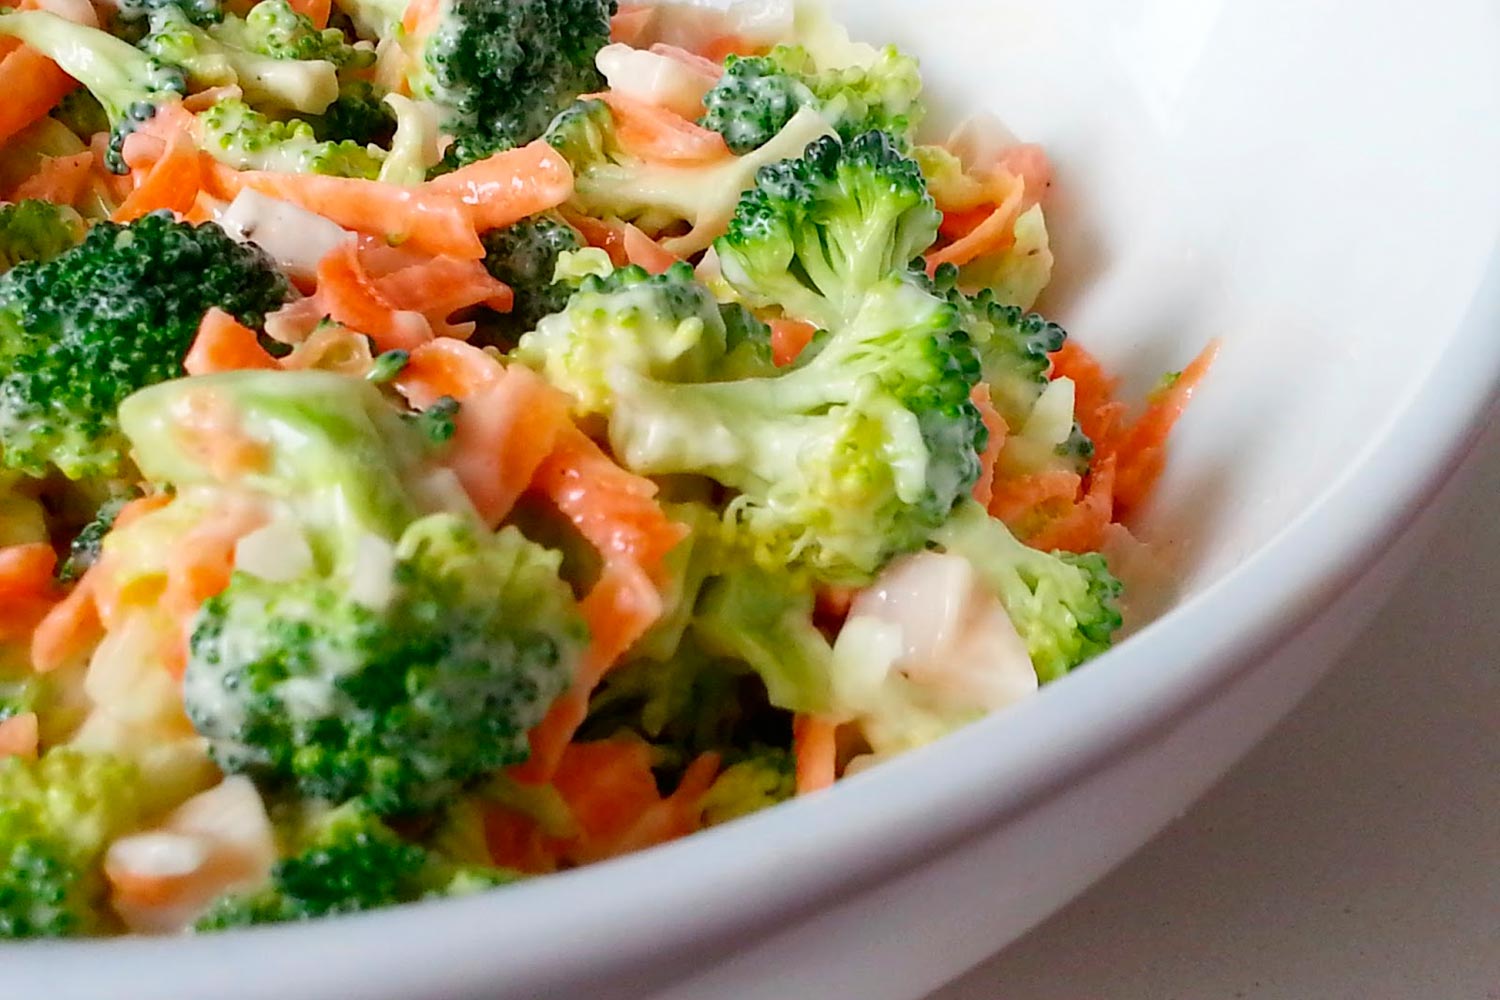 Ensalada de brócoli crudo, tomate y zanahoria (Saludable)